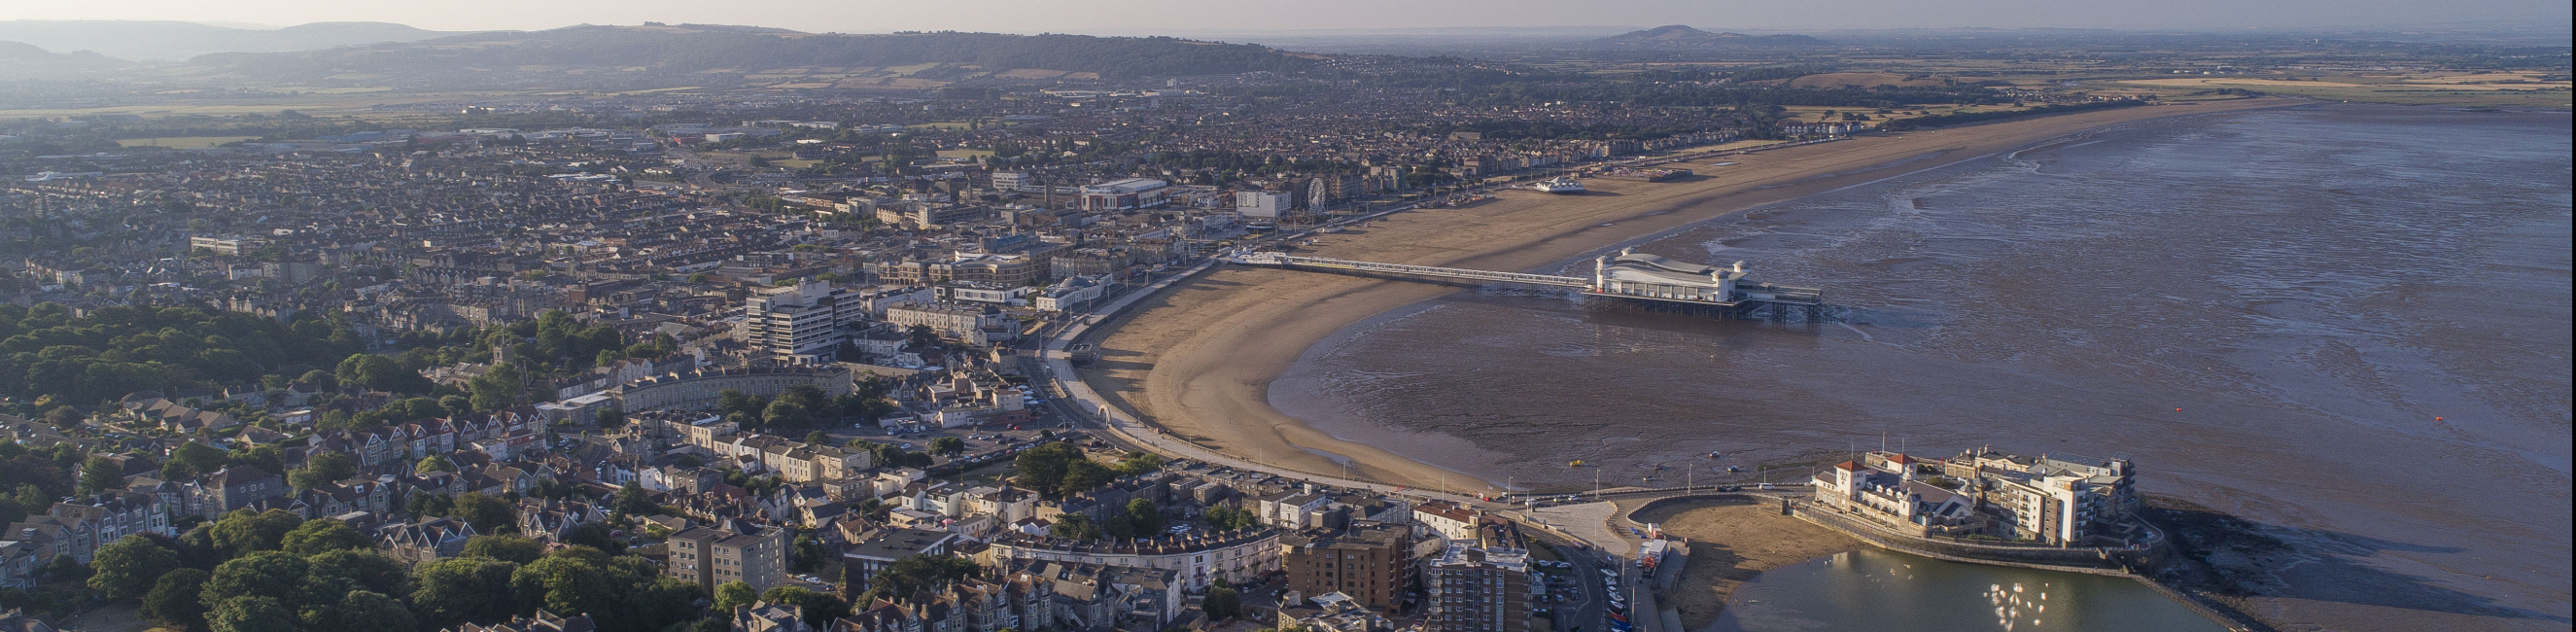 Drone shot of seaside town Weston-super-Mare